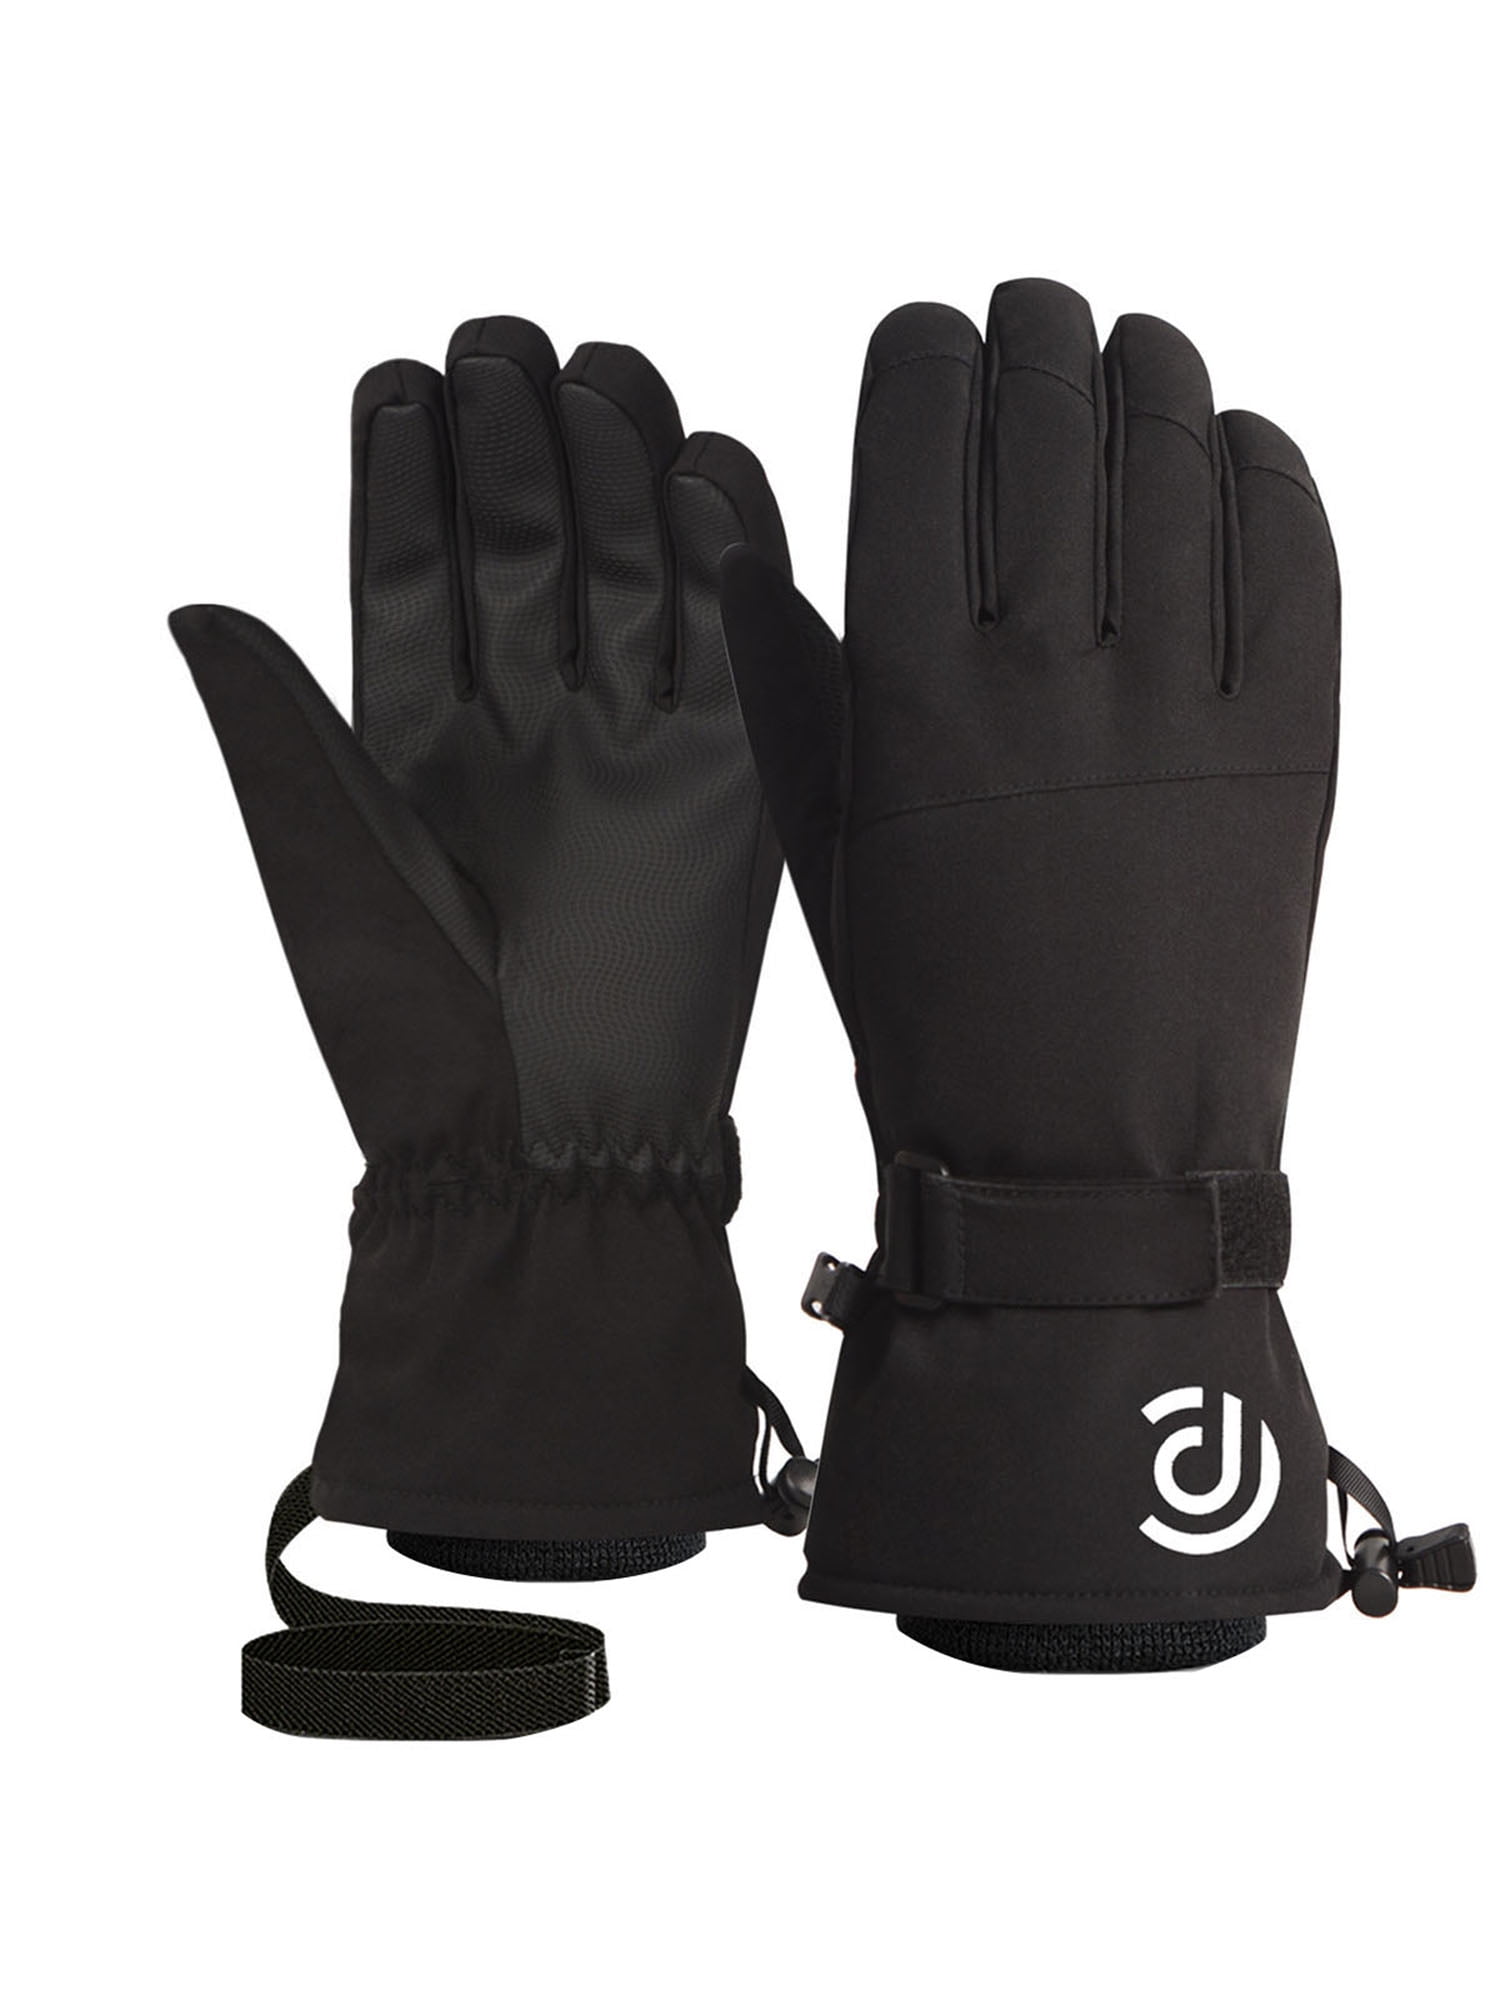 Touch Screen Winter Gloves Waterproof Thermal Warm Ski Snow Snowboard Men Women 